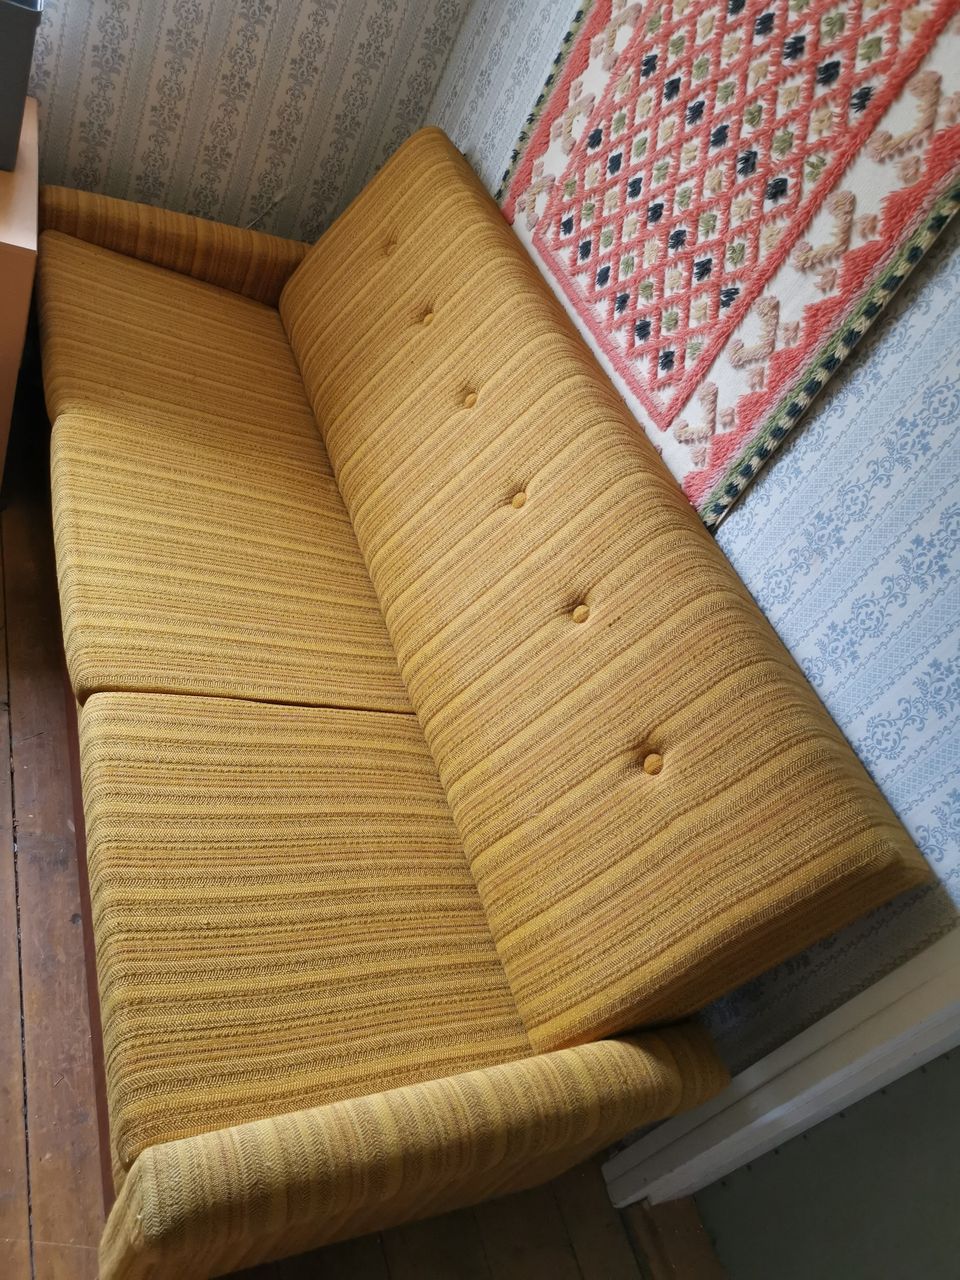 Vanha retro sohva kalusto n. -60-70 luvulta.